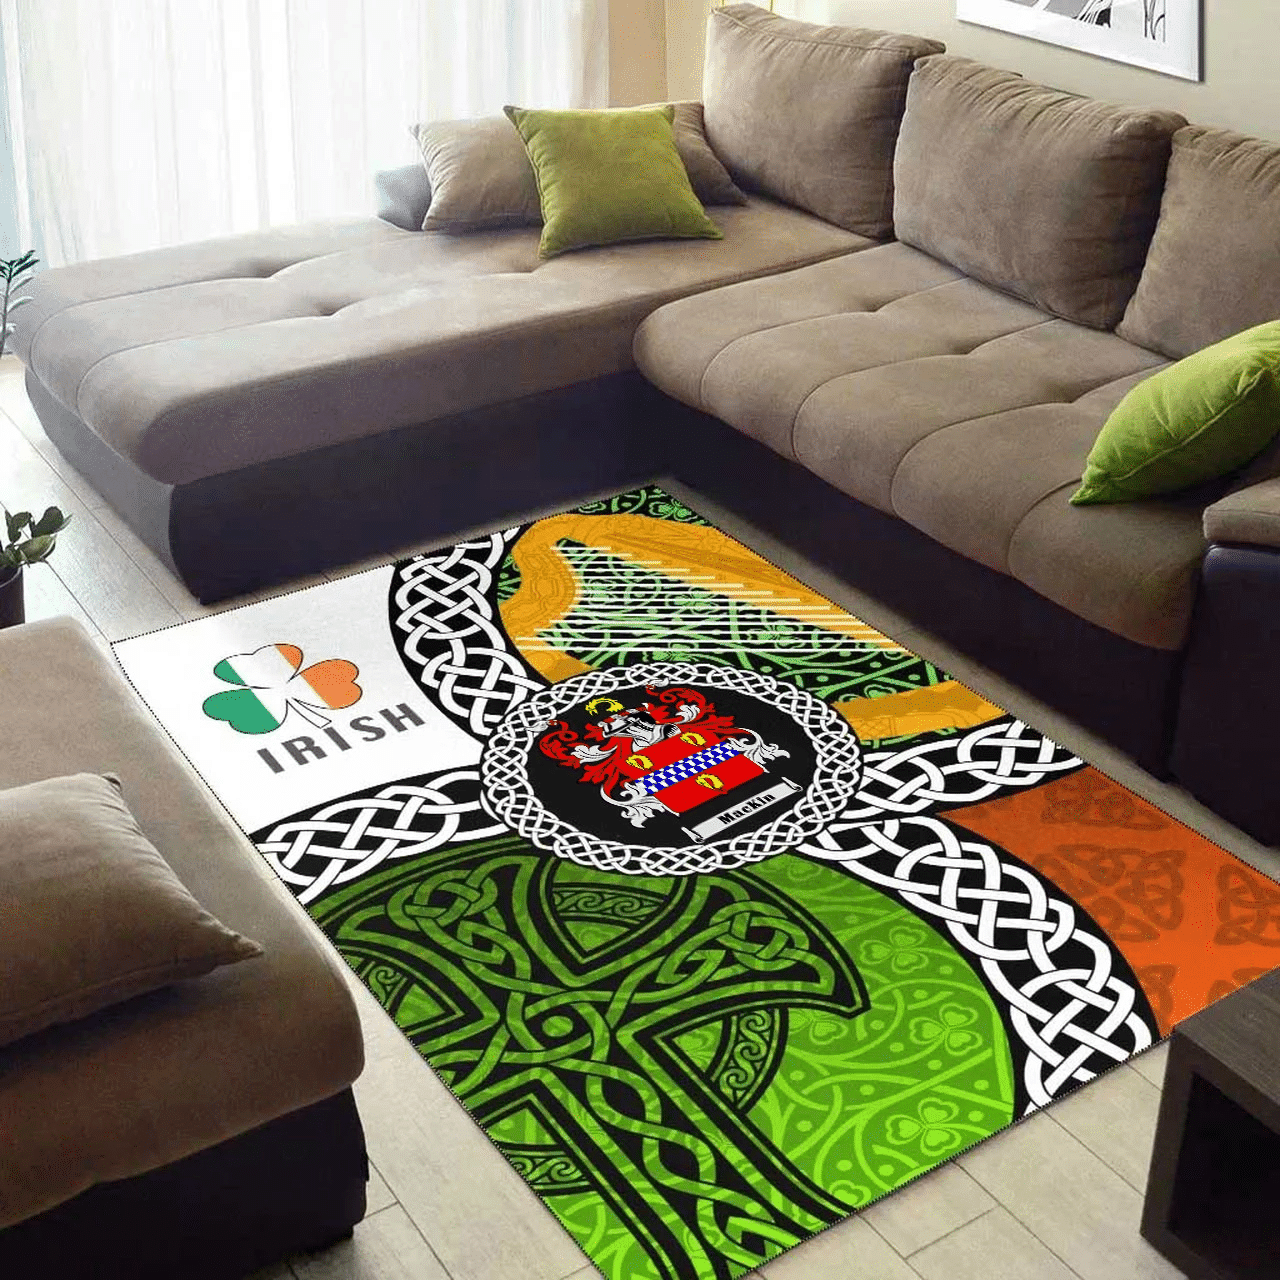 Ireland Area Rug - Mackin Family Crest Area Rug - Ireland With Circle Celtics Knot